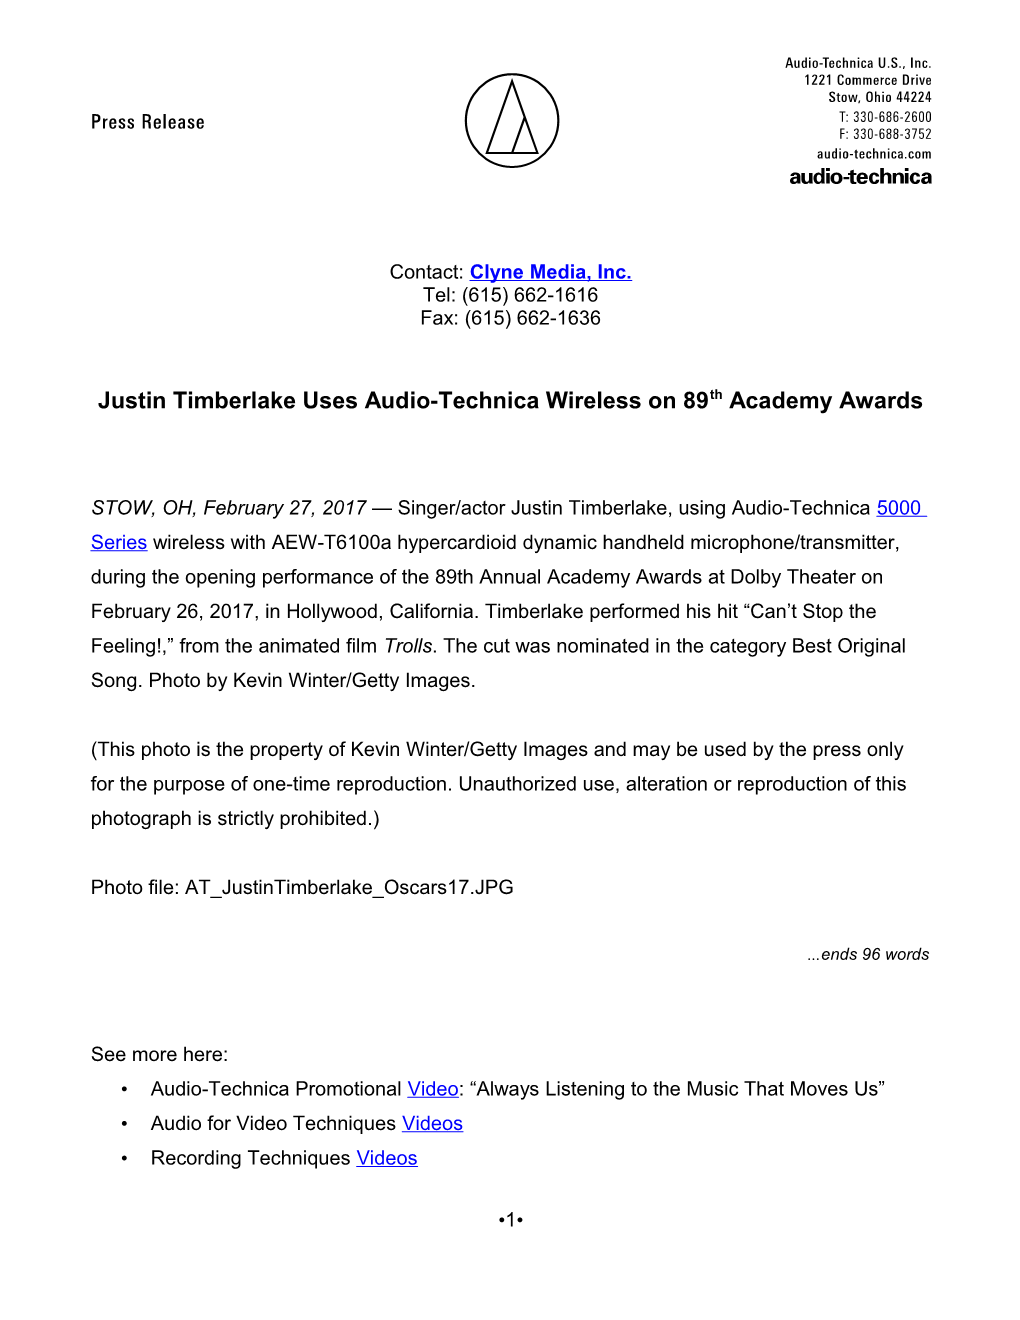 Justin Timberlake Uses Audio-Technica Wireless on 89Th Academy Awards